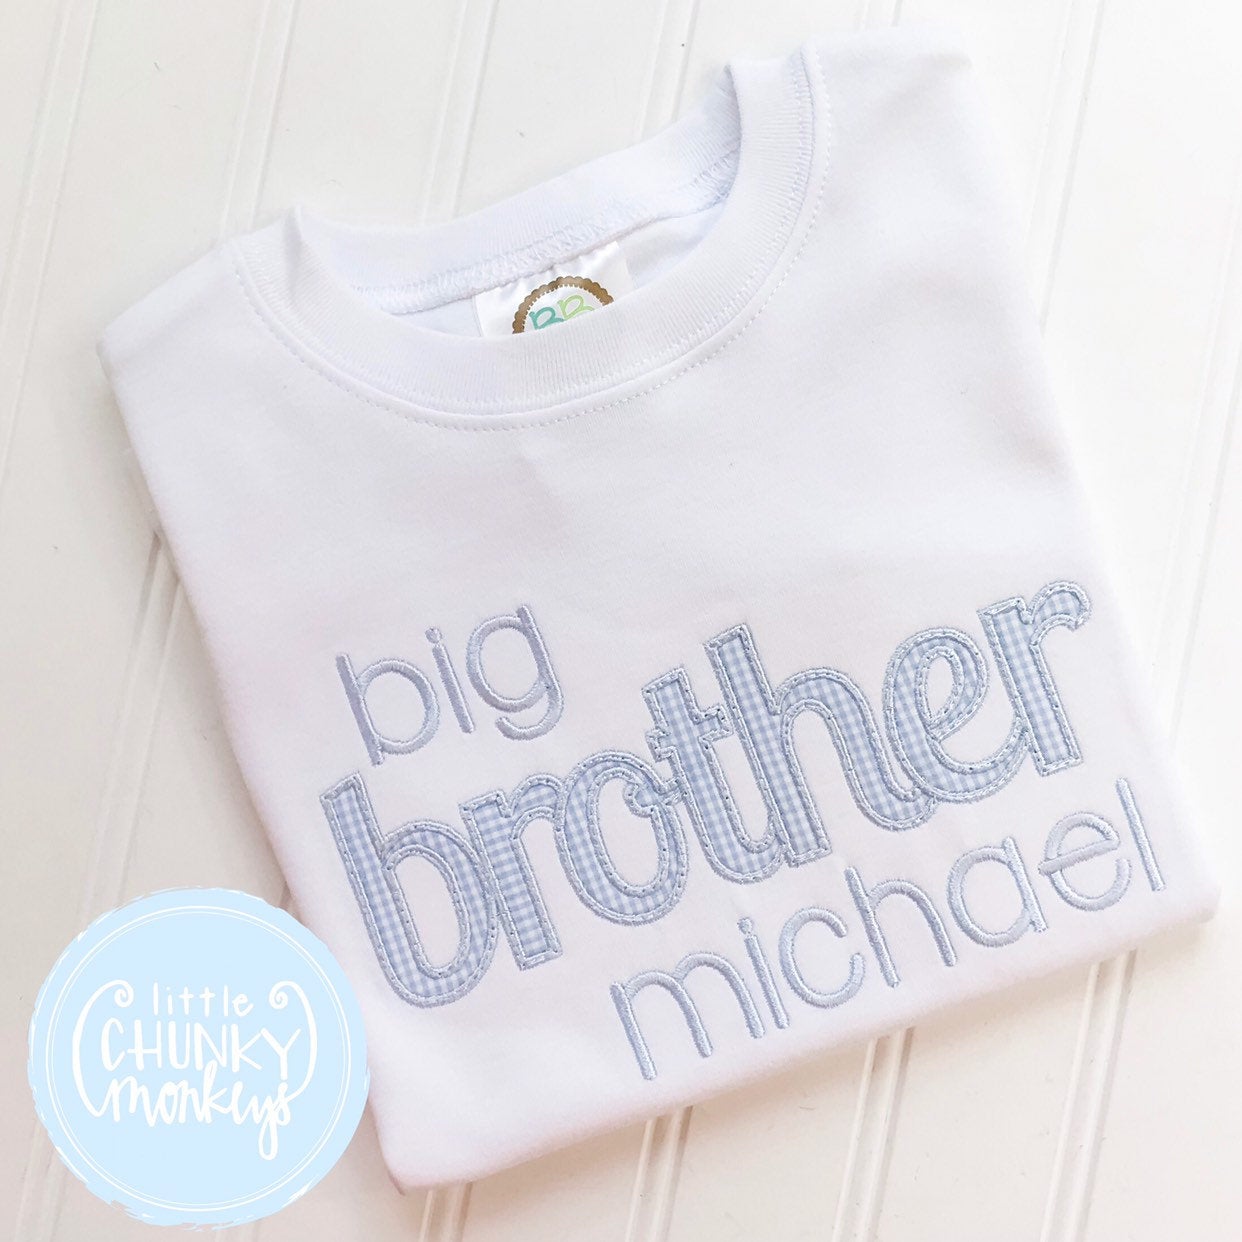 Boy Shirt - Boy Shirt - Big Brother Applique Shirt With Name